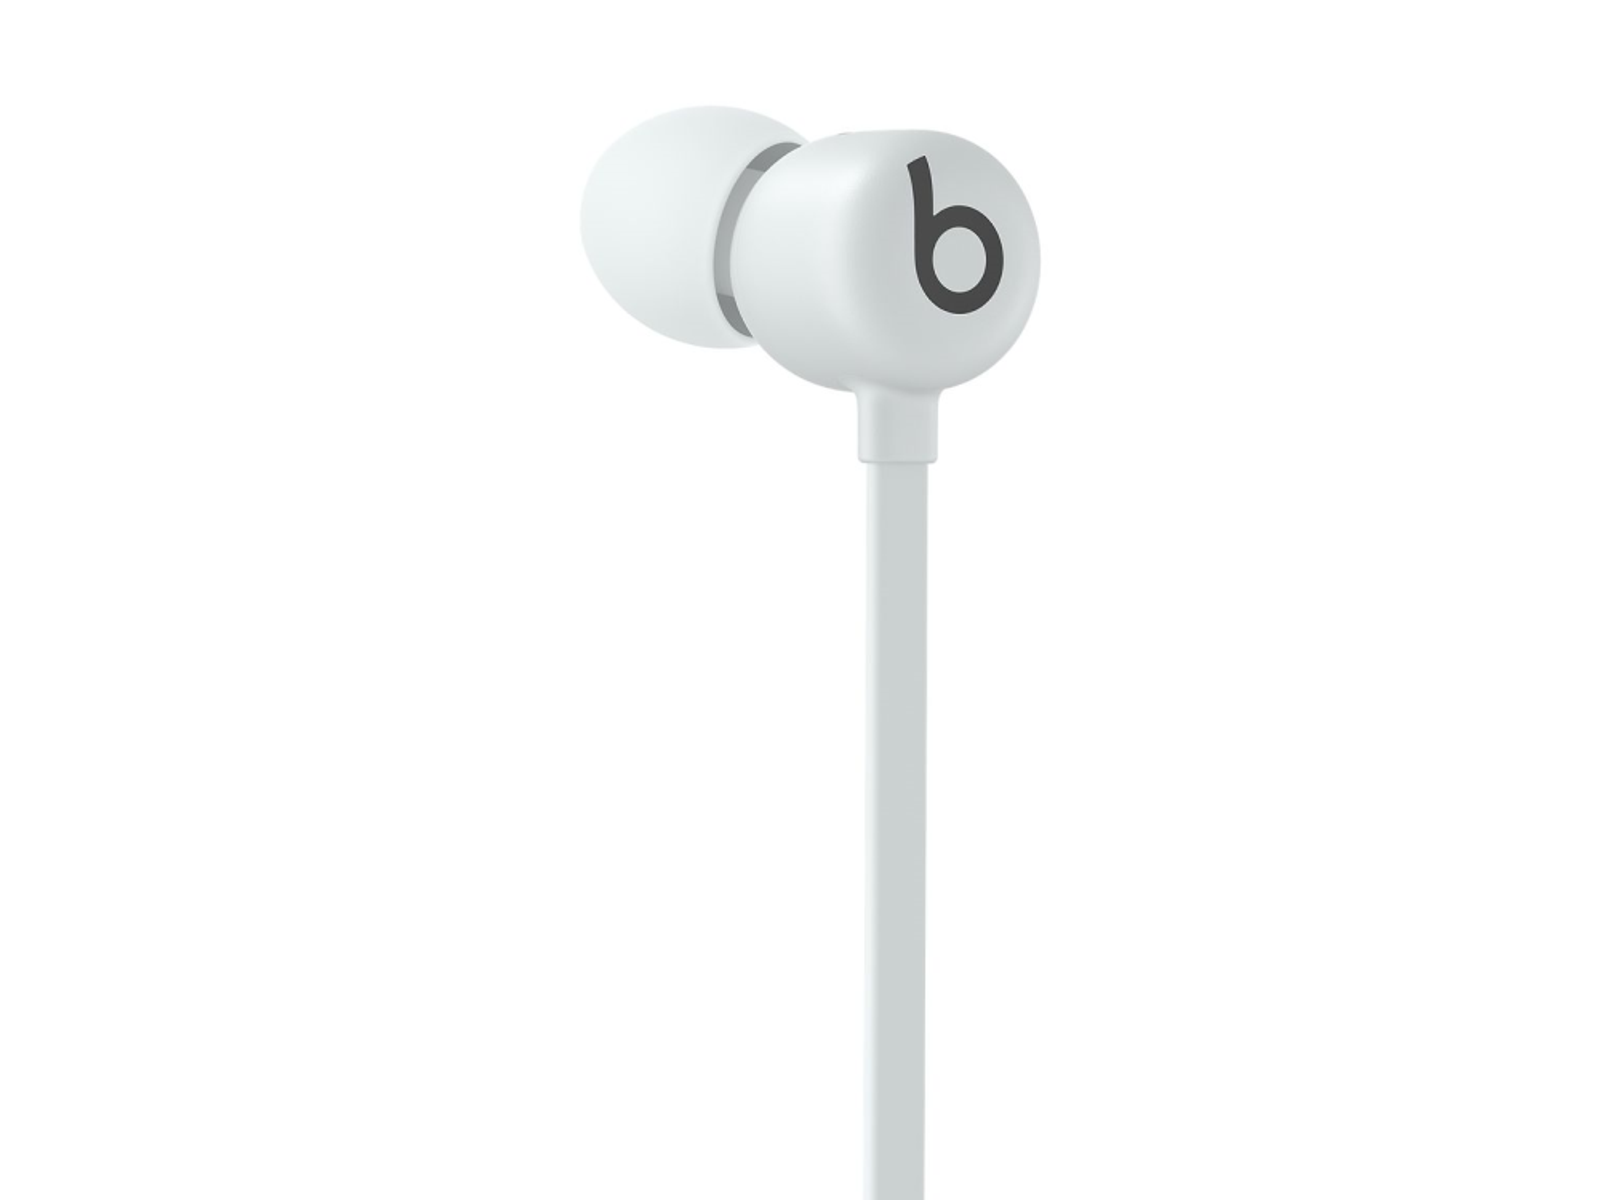 1,SMOKE Bluetooth GRAY, Rauchgrau FLEX MYME2ZM/A Kopfhörer Over-ear BEATS